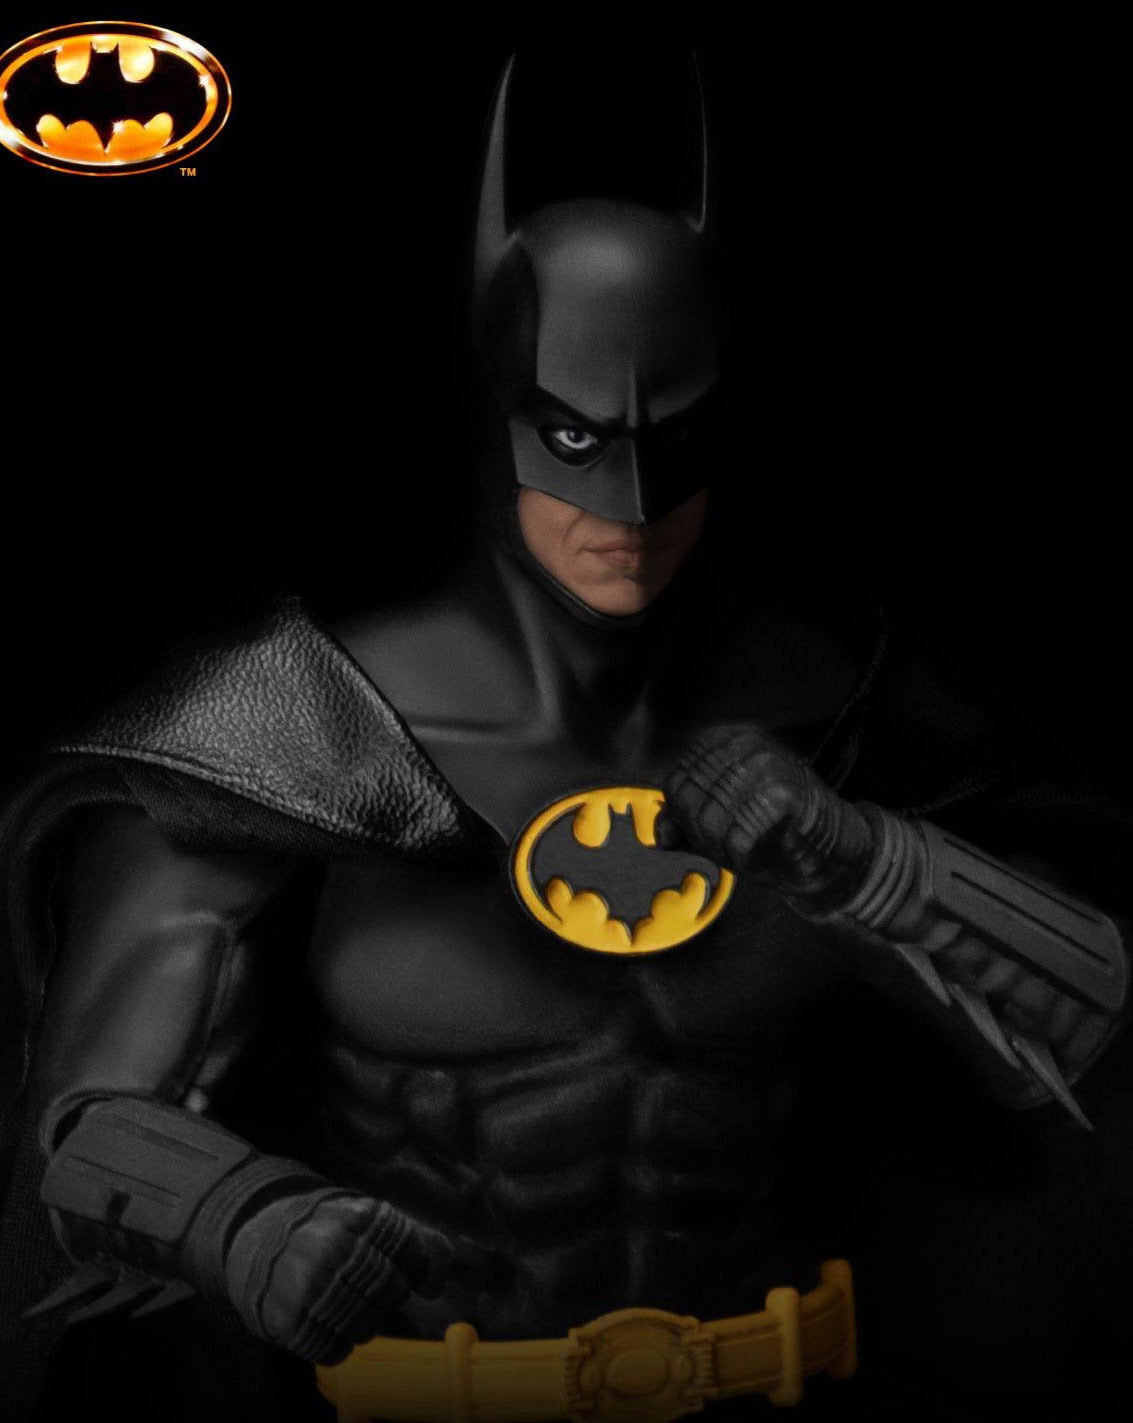 Batman 1989 - Batman Dynamic 8ction Heroes